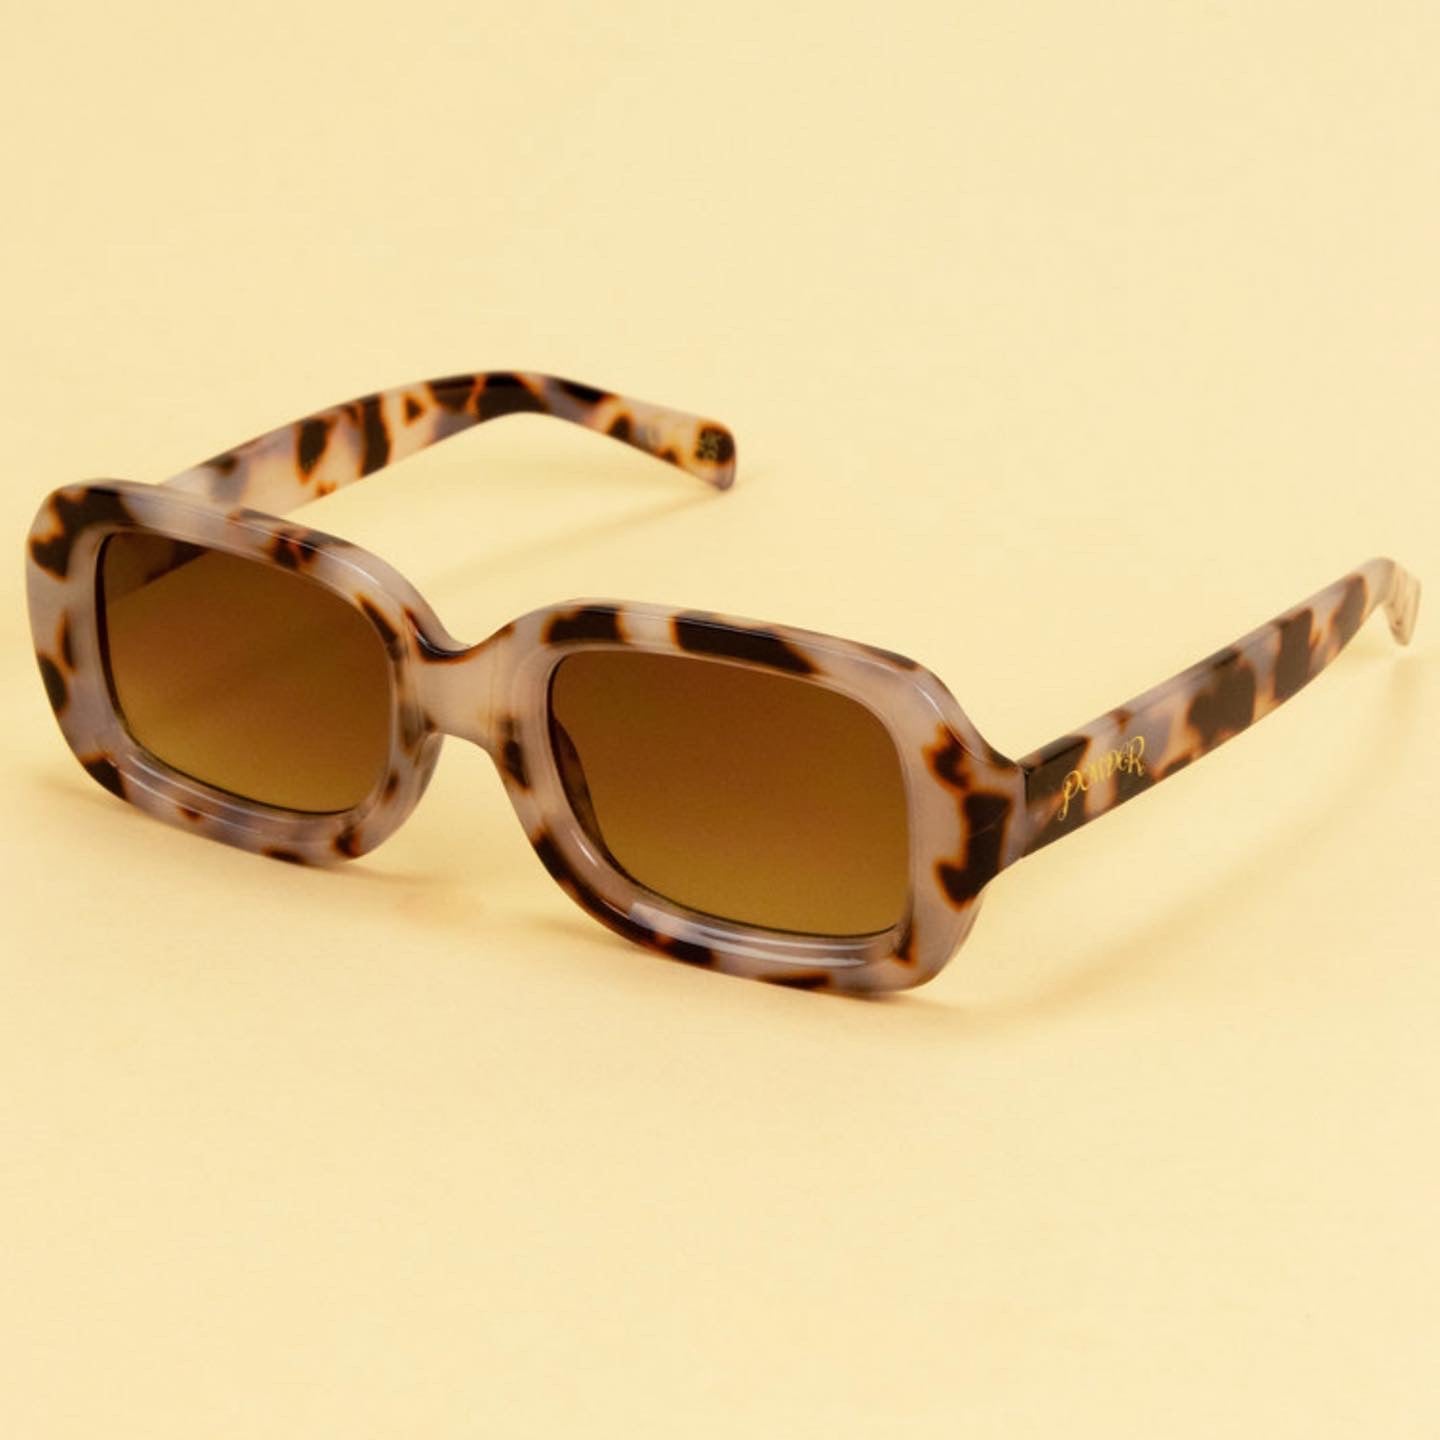 Enya Sunglasses - Cool Grey and Brown